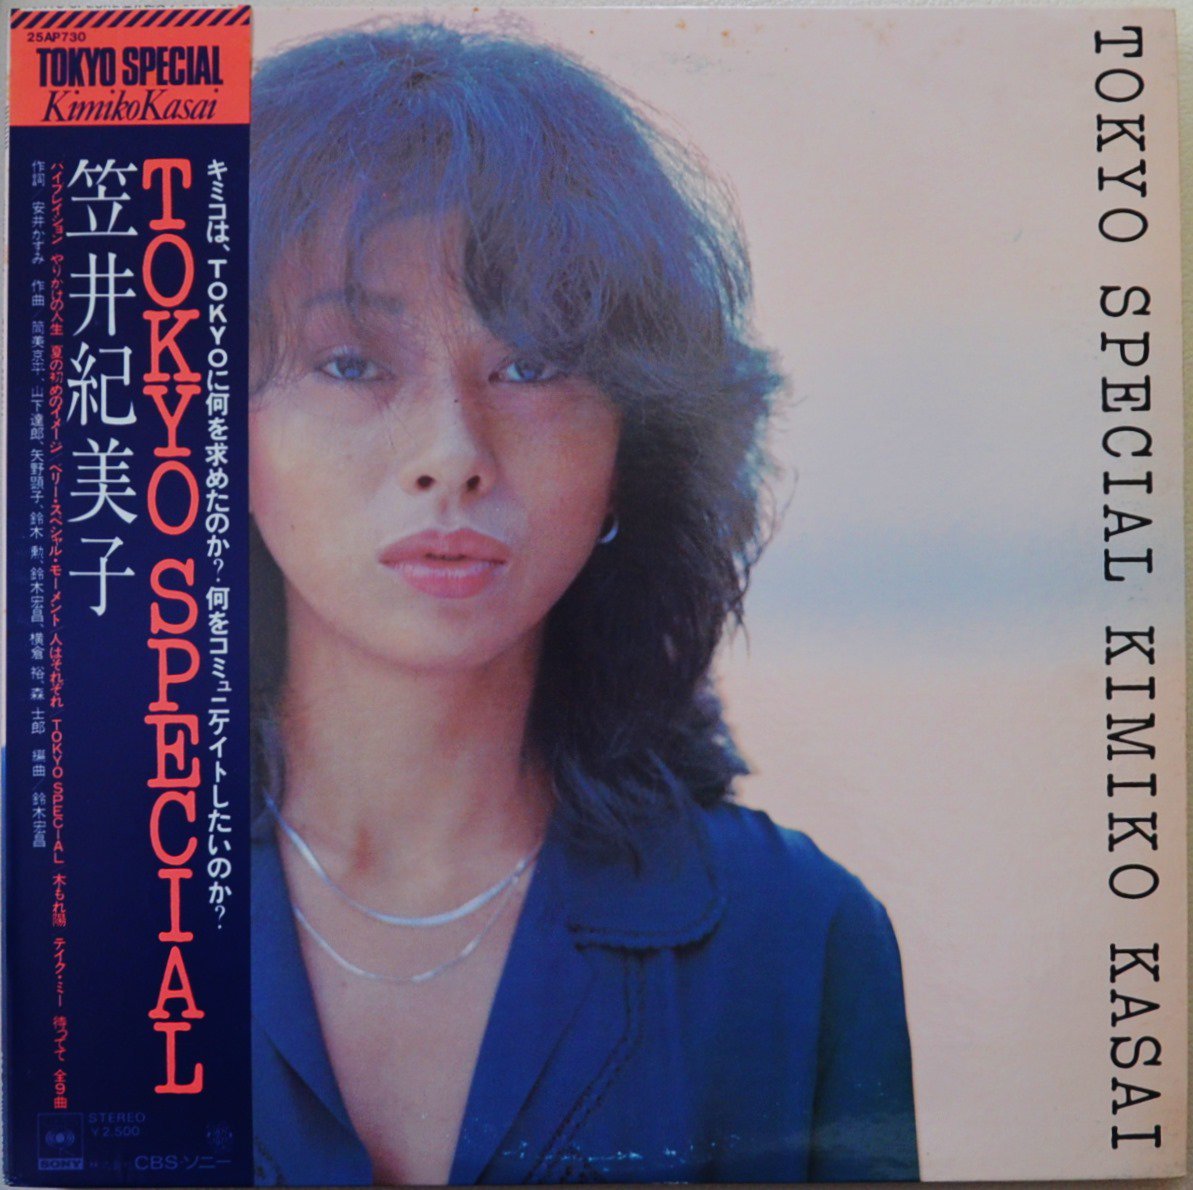 笠井紀美子 KIMIKO KASAI / TOKYO SPECIAL (LP)